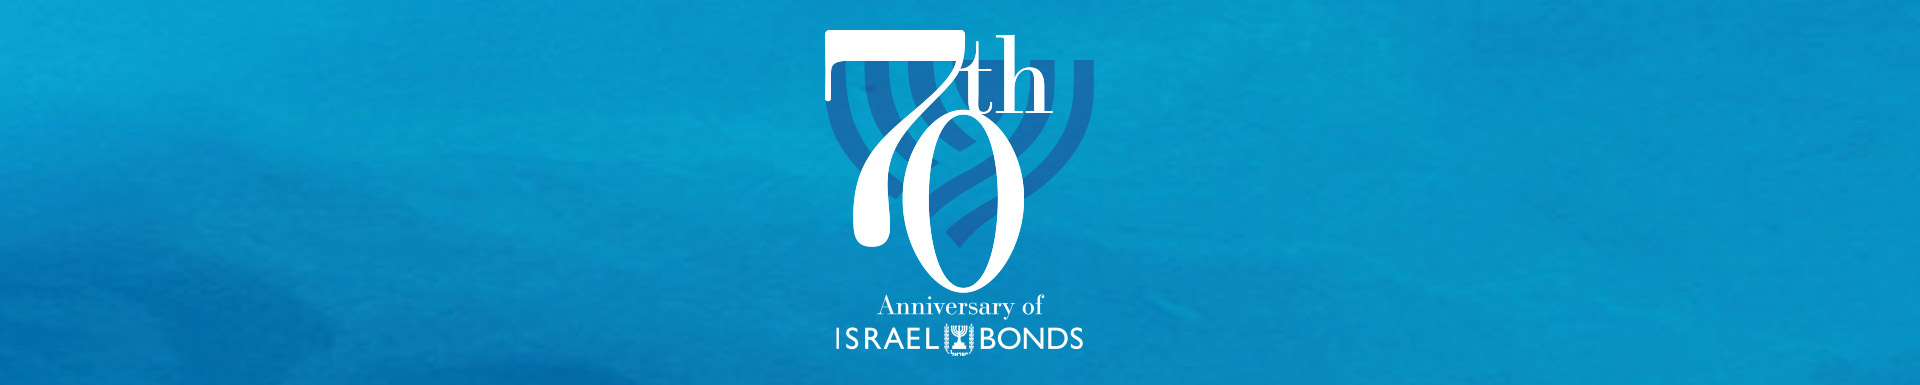 Israel Bonds 70th Anniversary